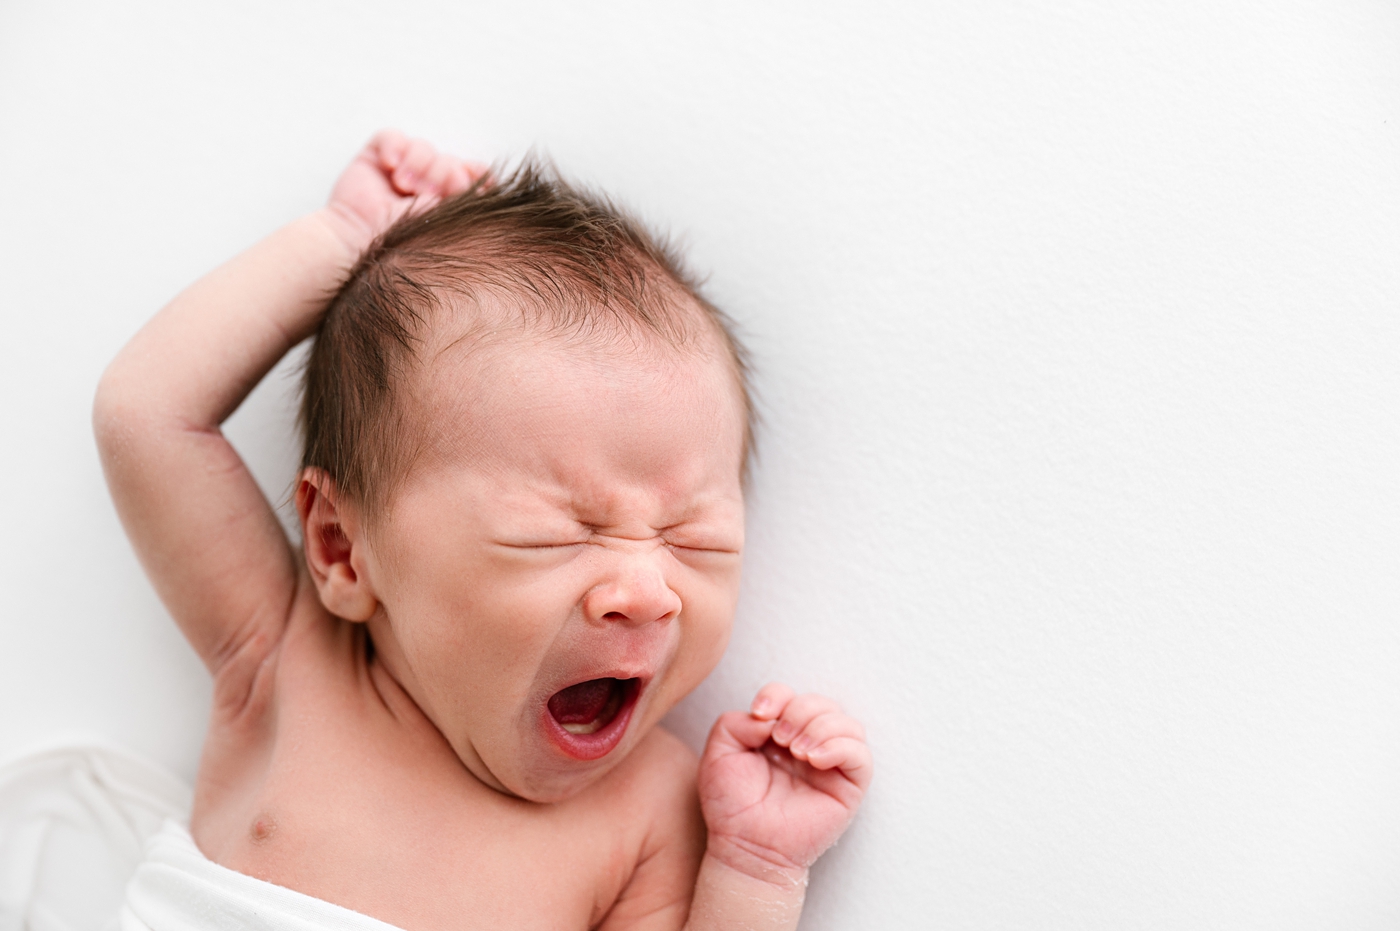 Baby boy yawns during newborn session. Photo by Meg Newton Photography.